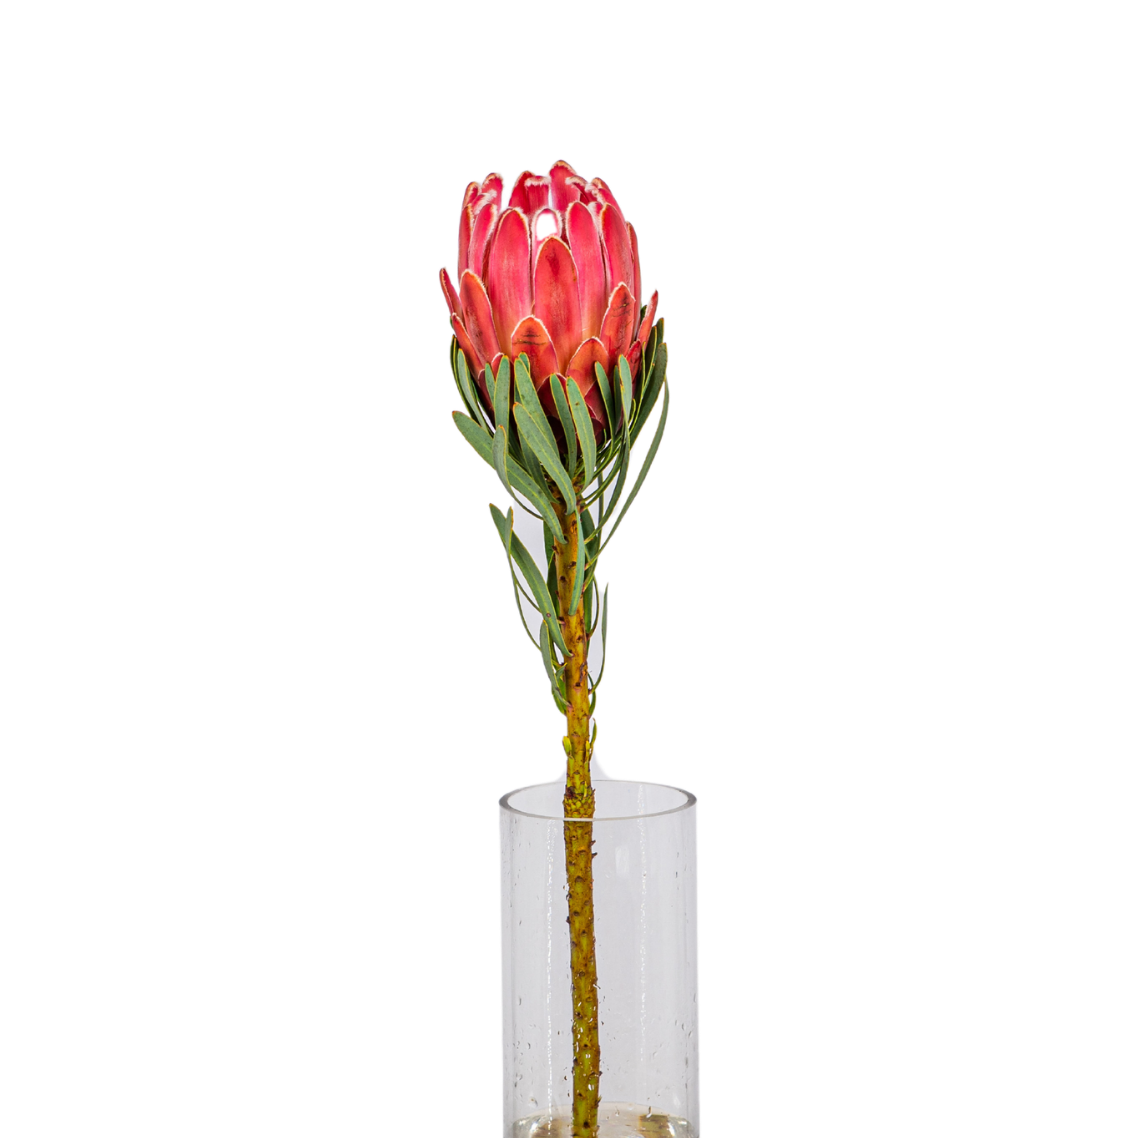 Protea Venus (South Africa)